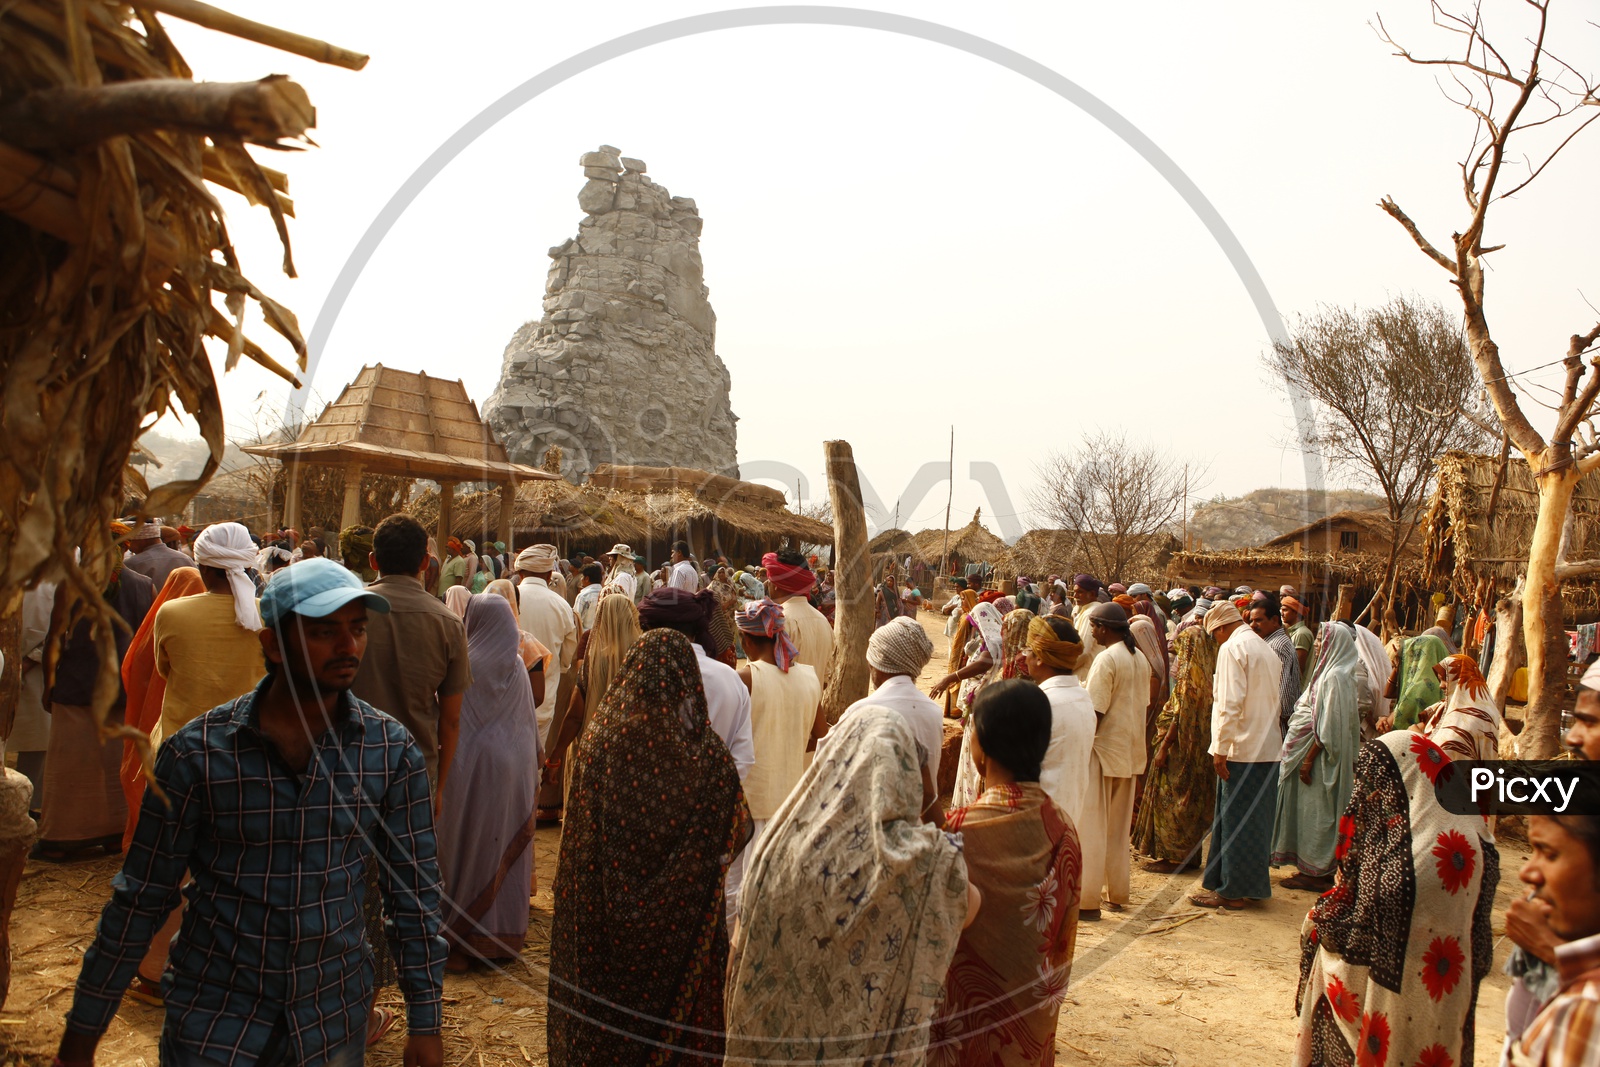 Crowd Gathering In a Rural Village